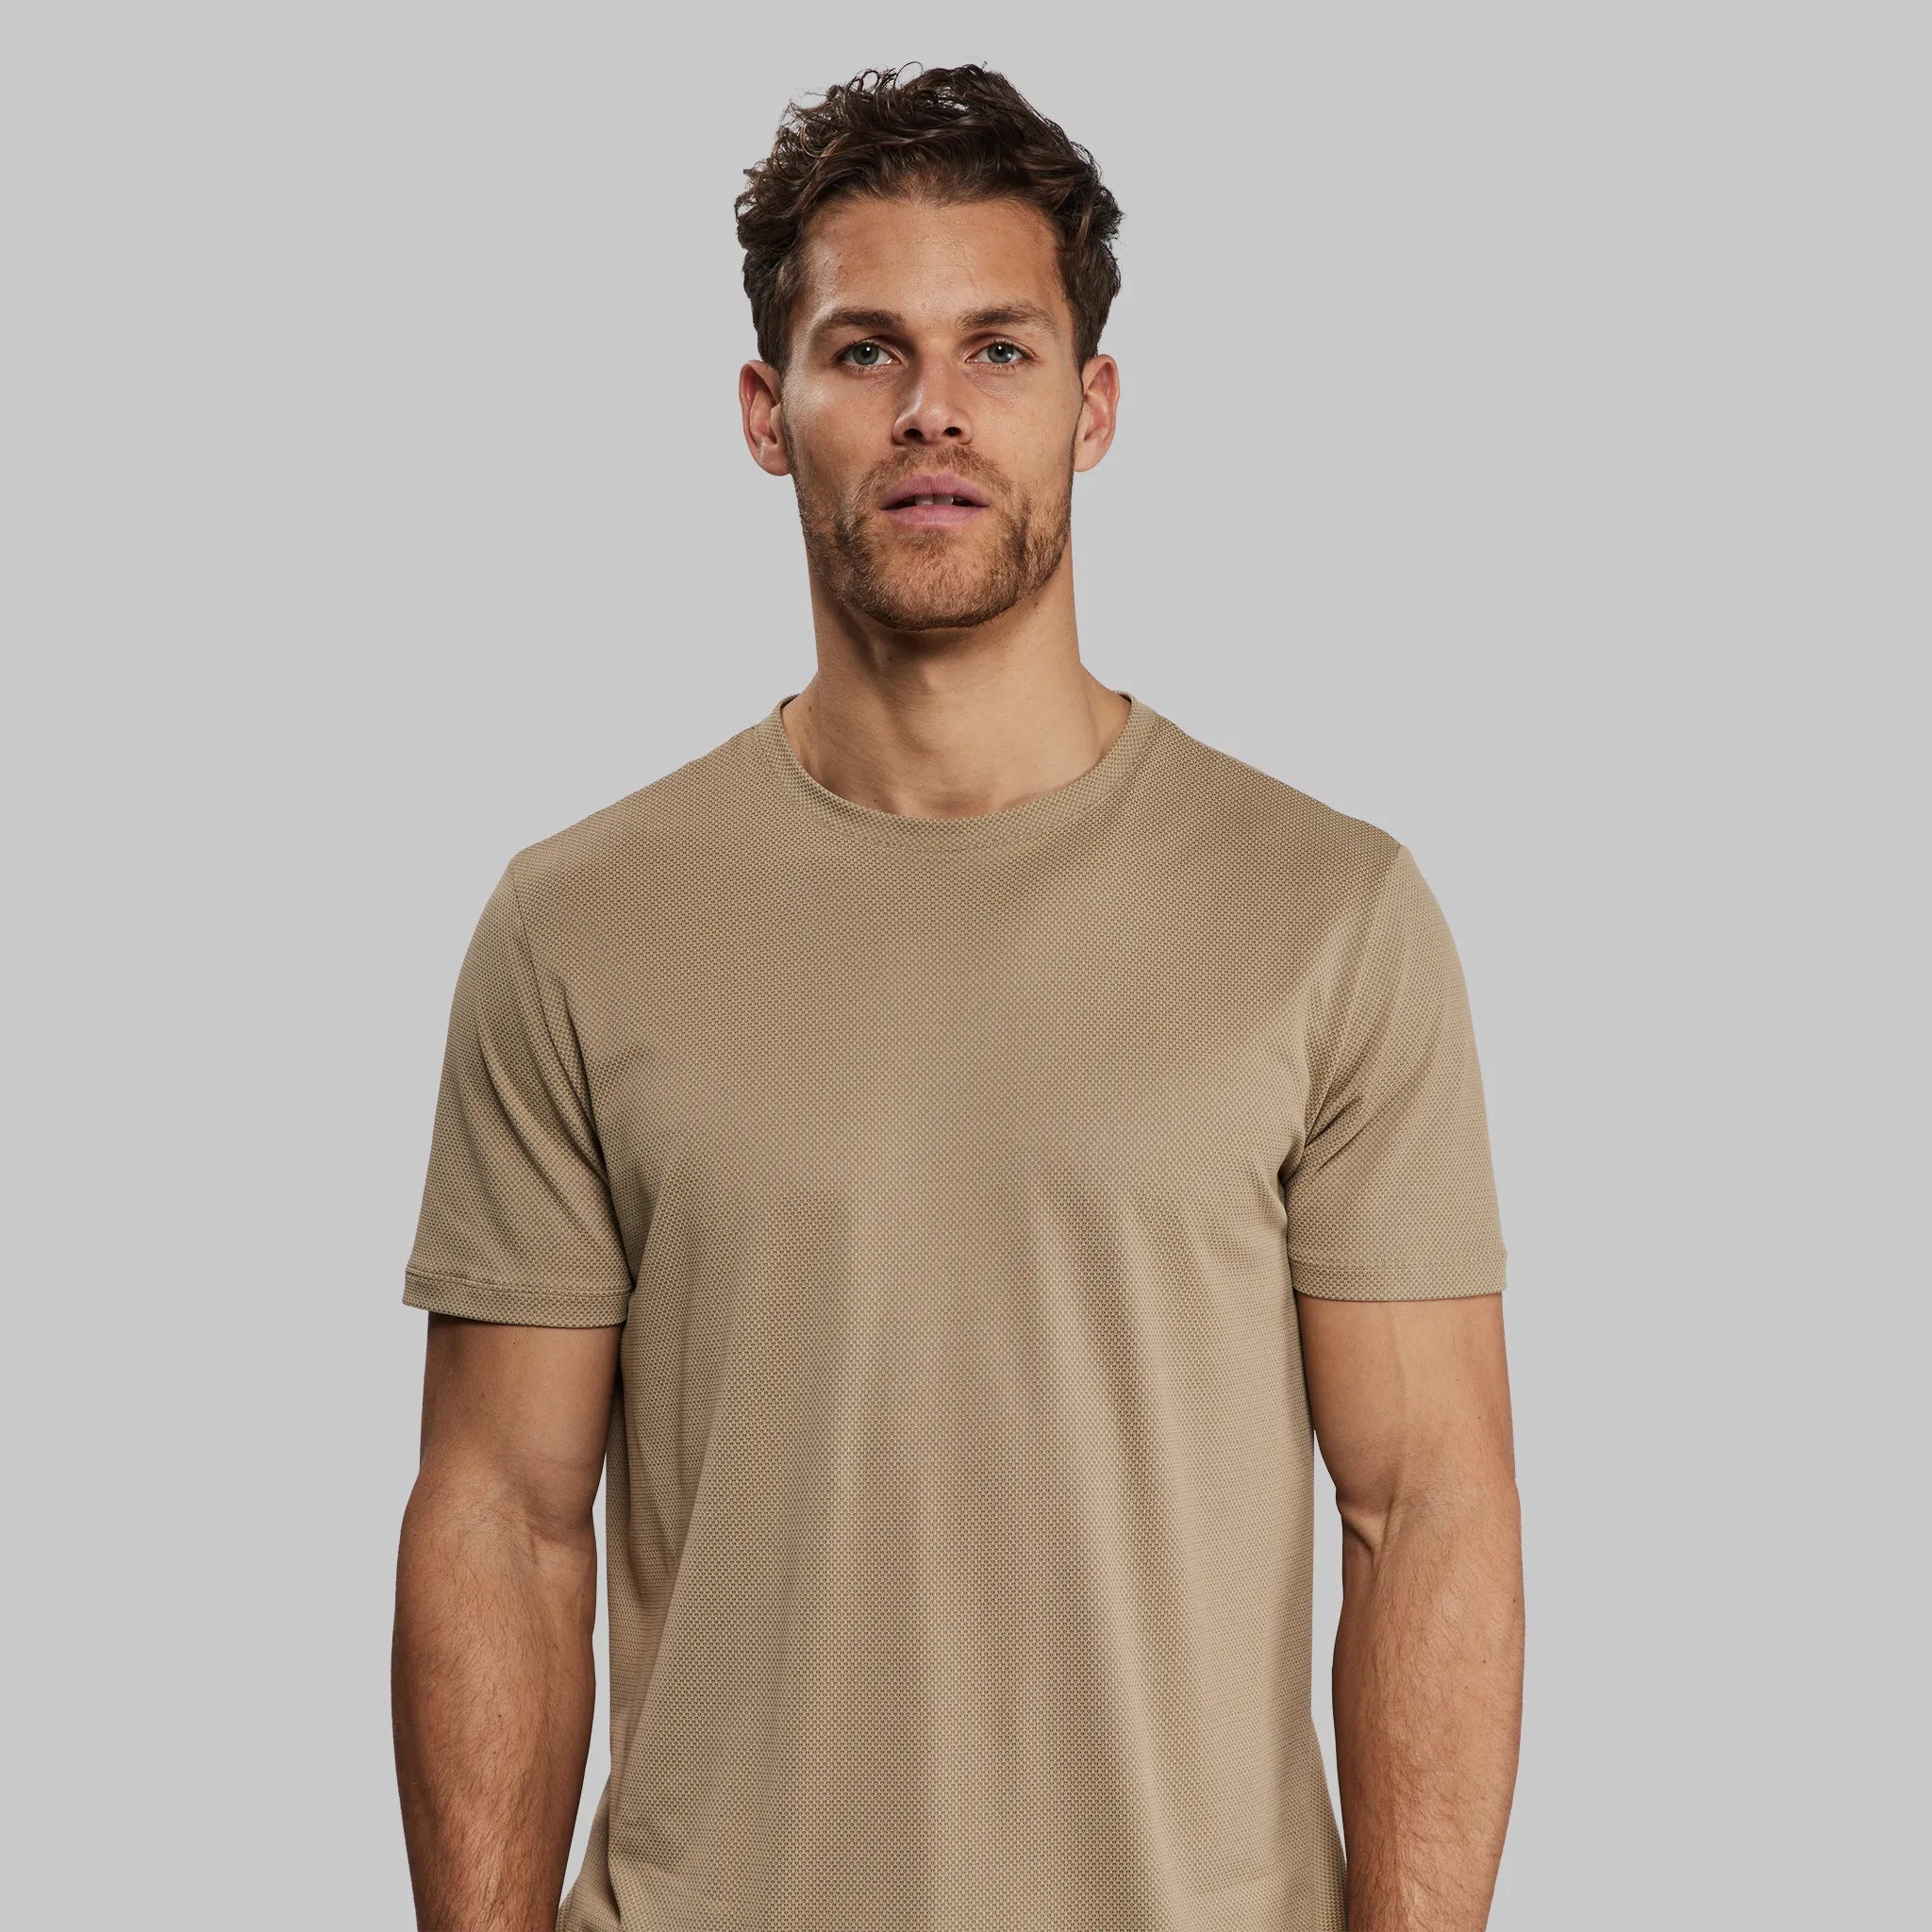 Graphene T Shirt. Sand edition